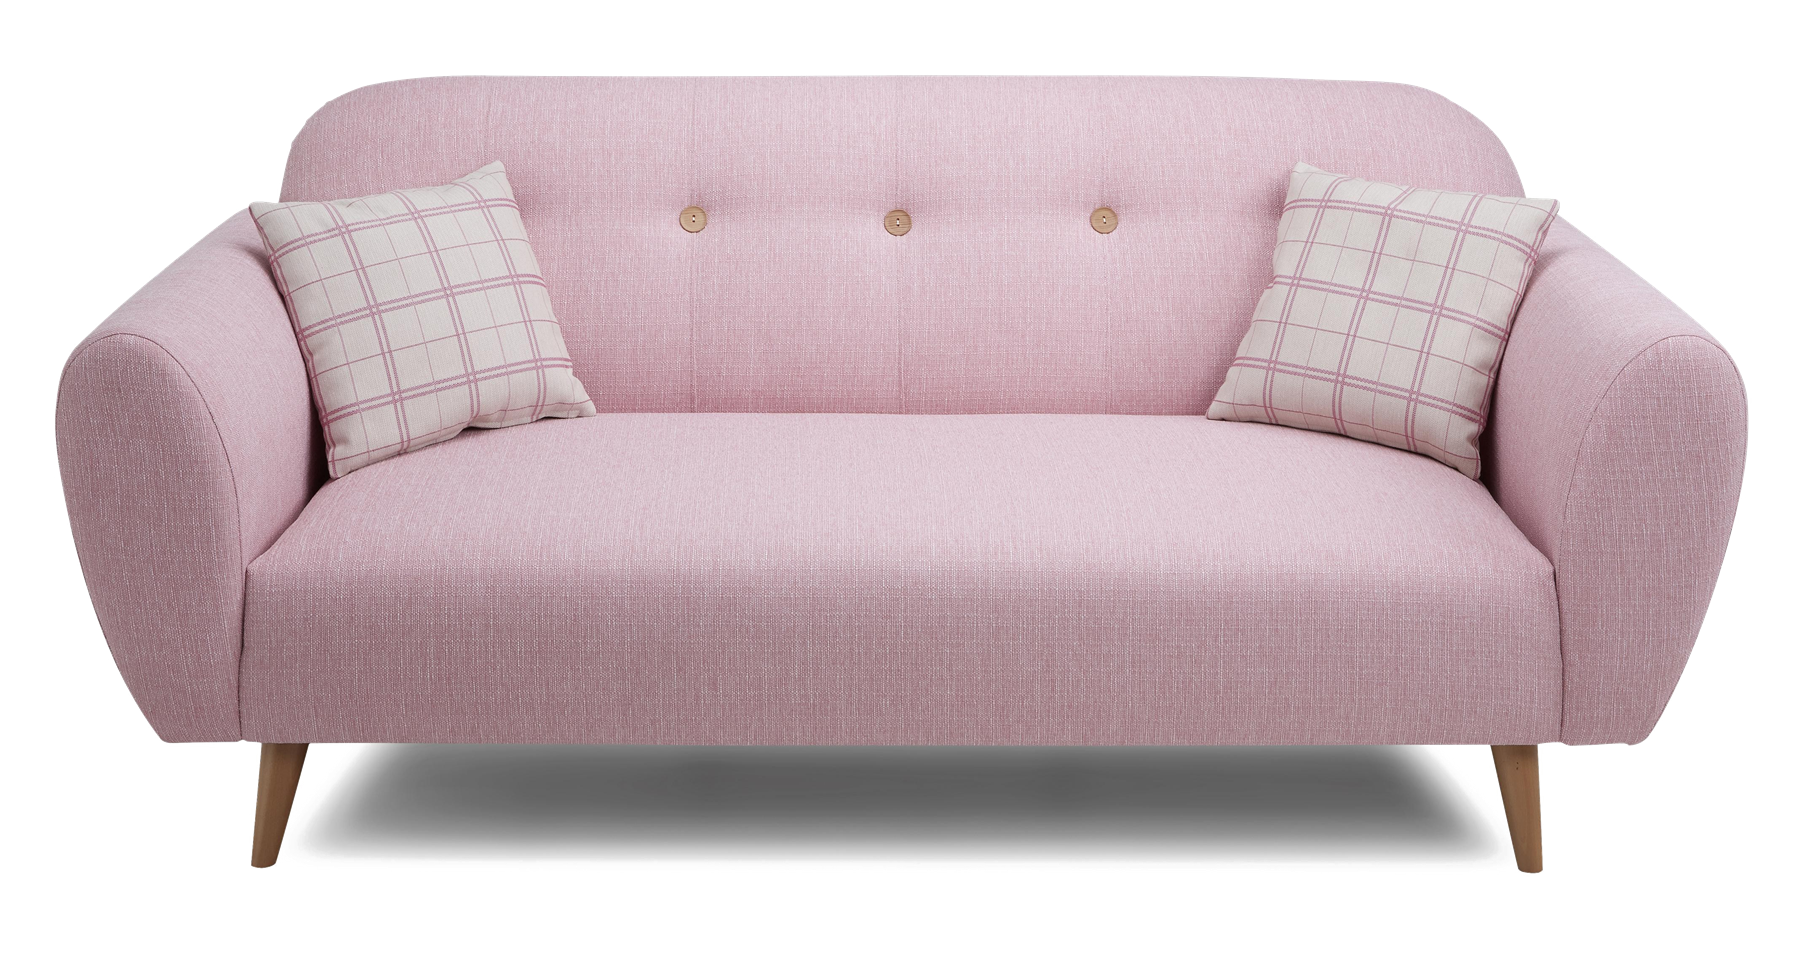 Sofa Bed PNG Image